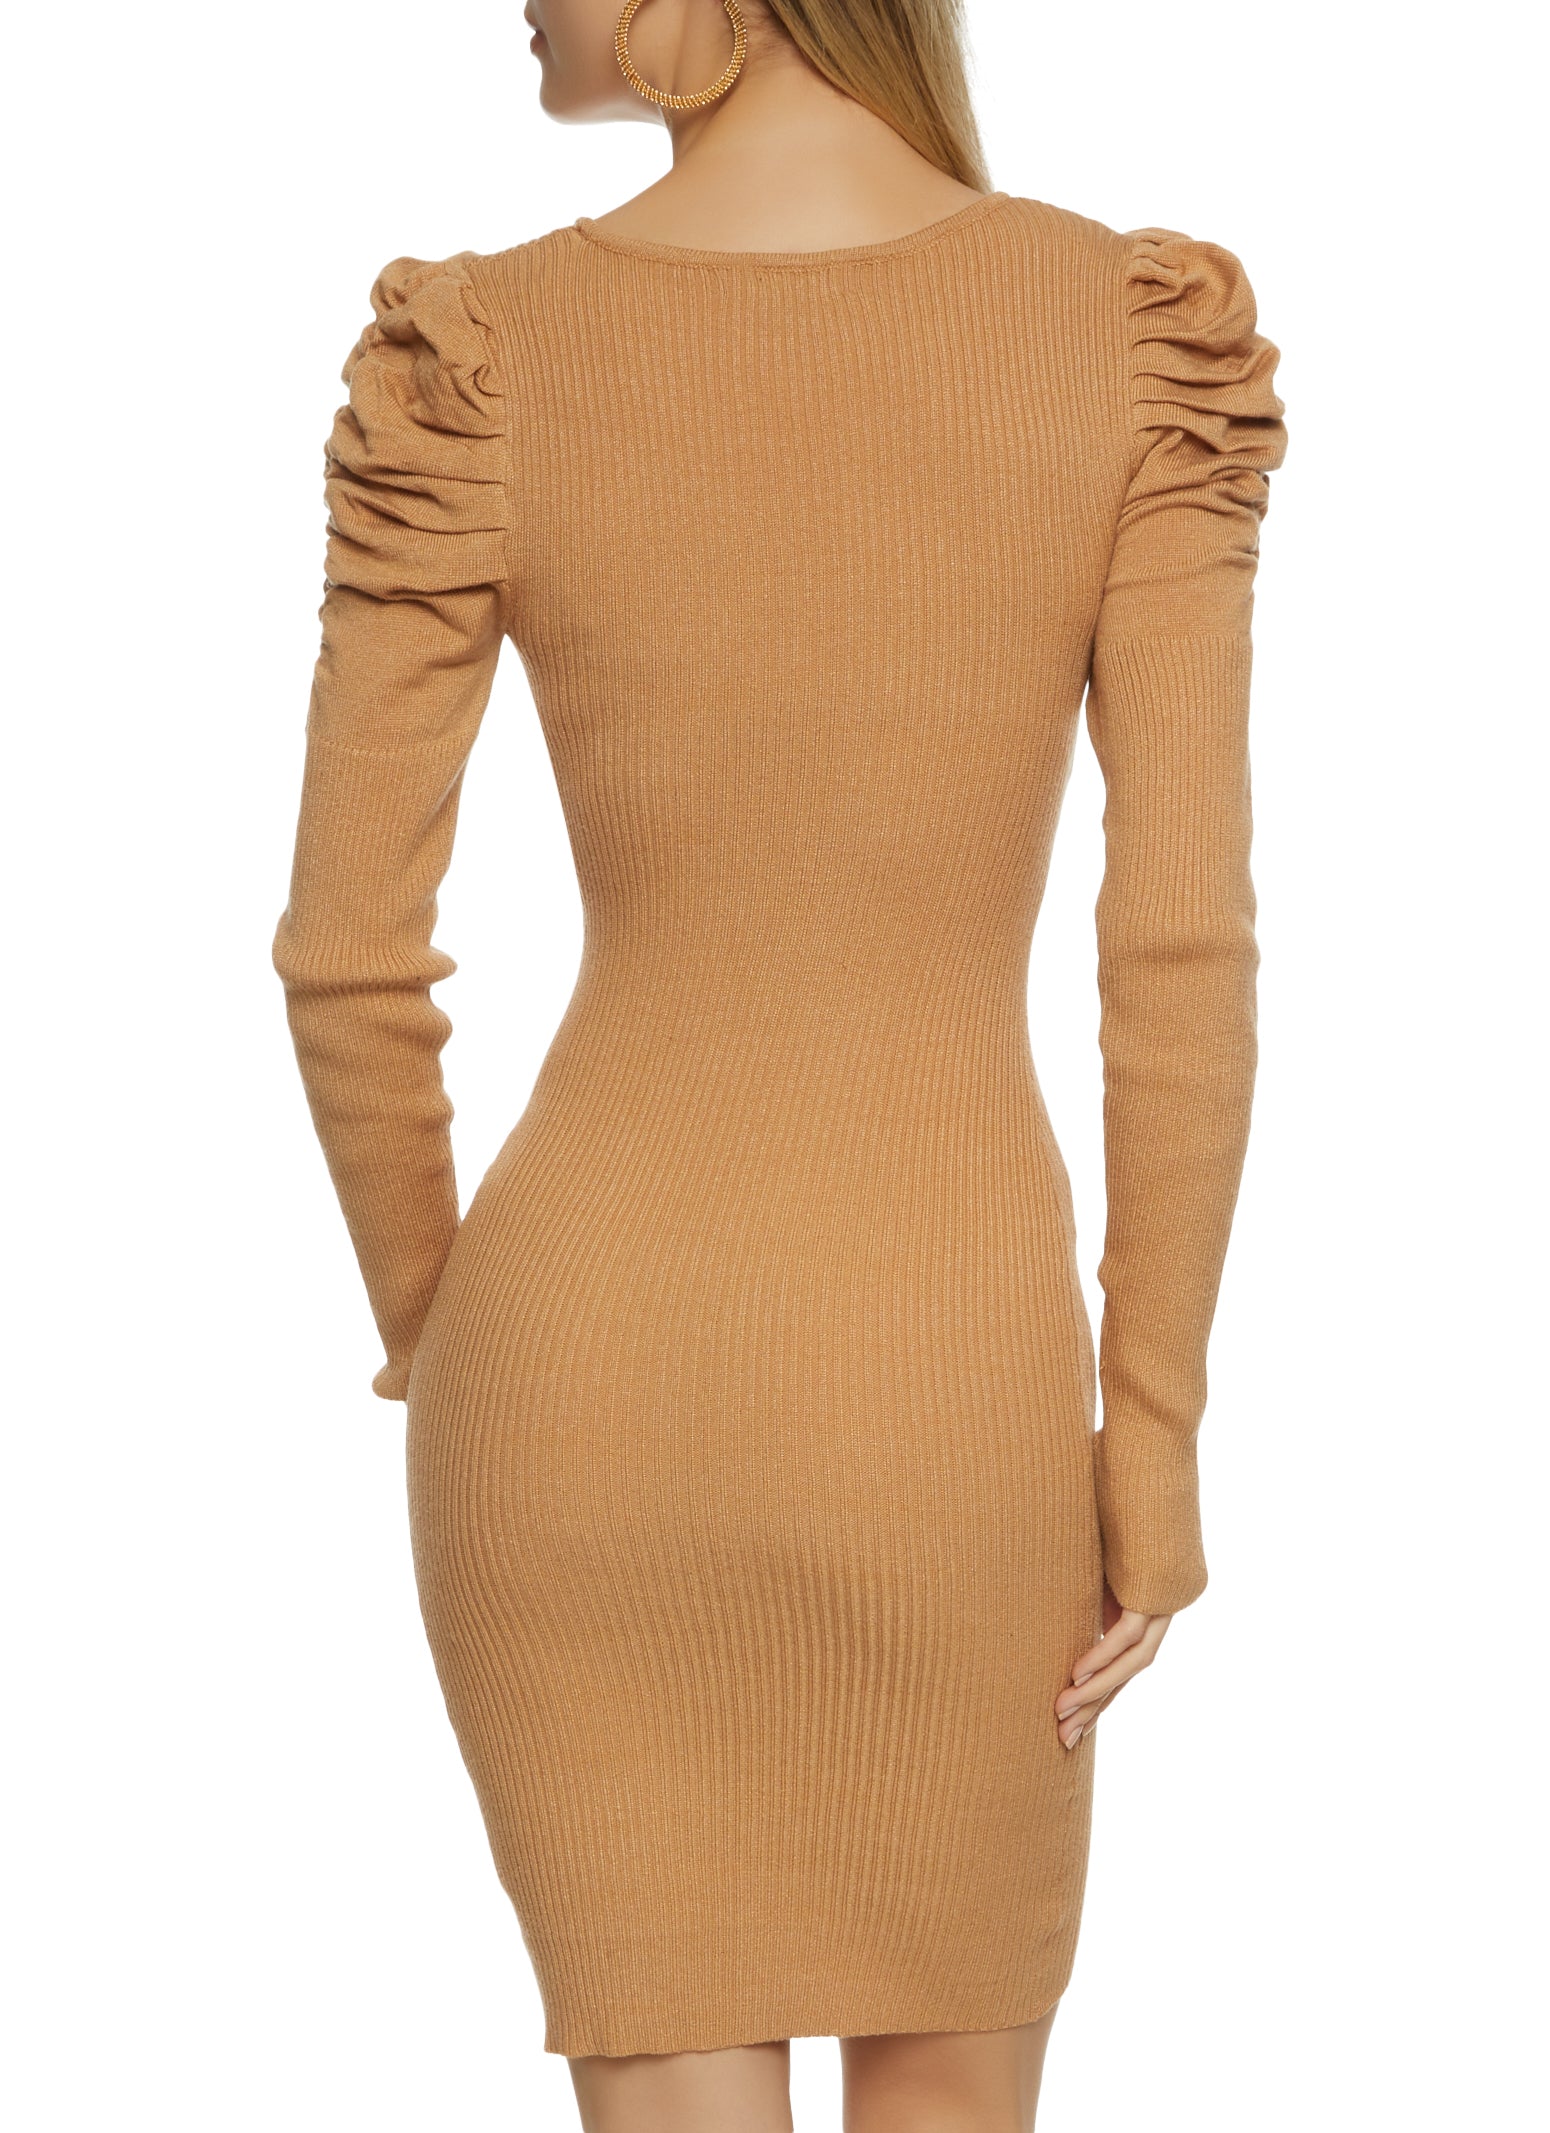 Puff Detail Sweater Dress in Tan